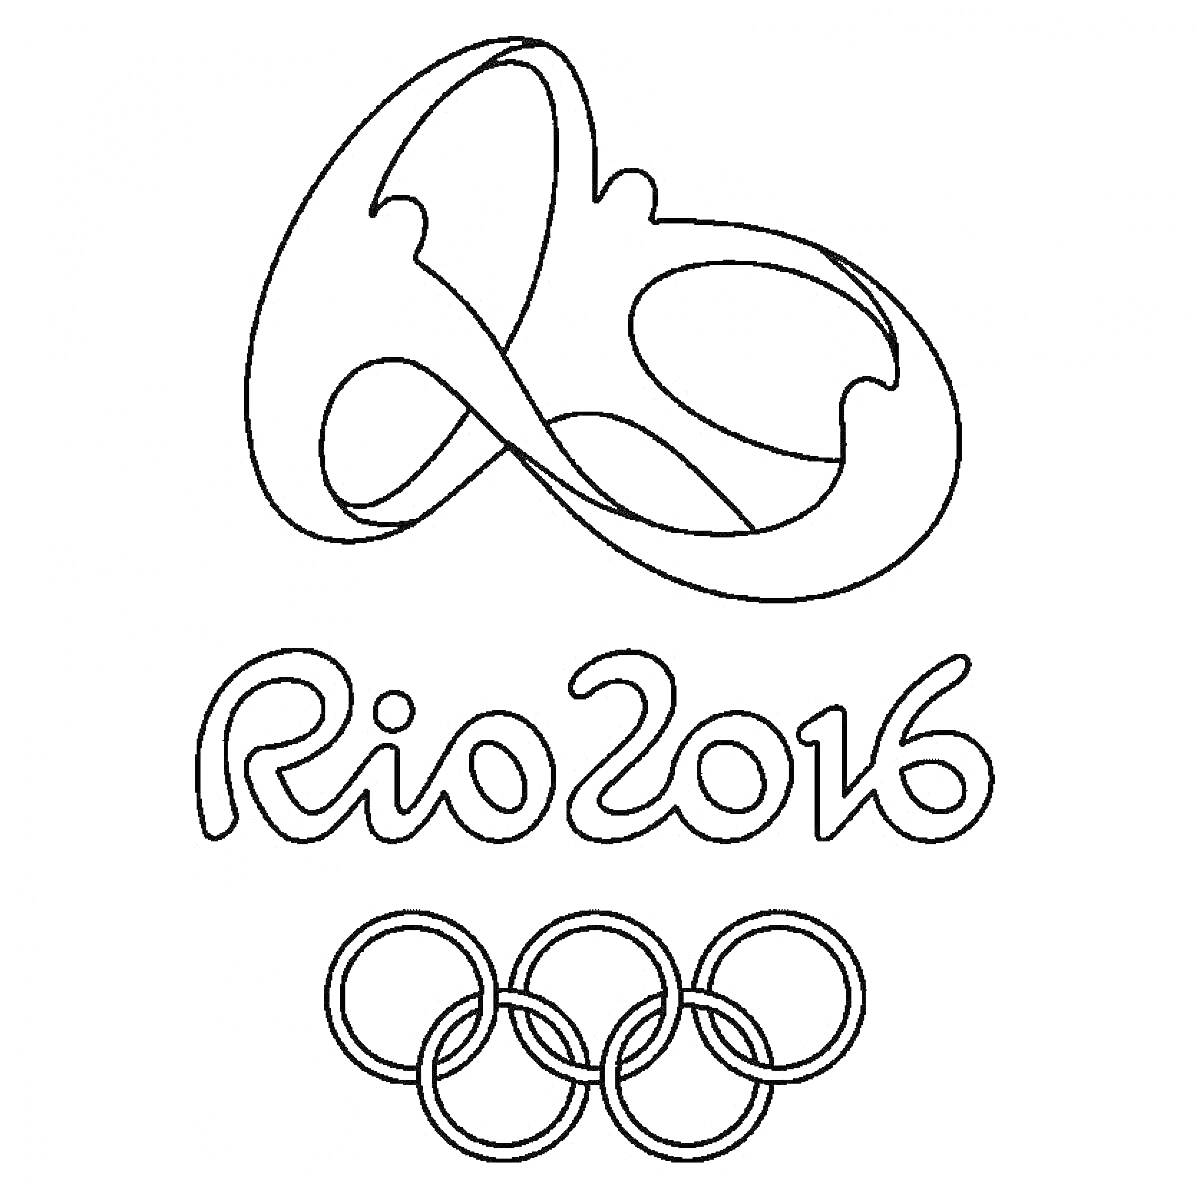 Раскраска Логотип Олимпийских игр Рио 2016 с олимпийскими кольцами